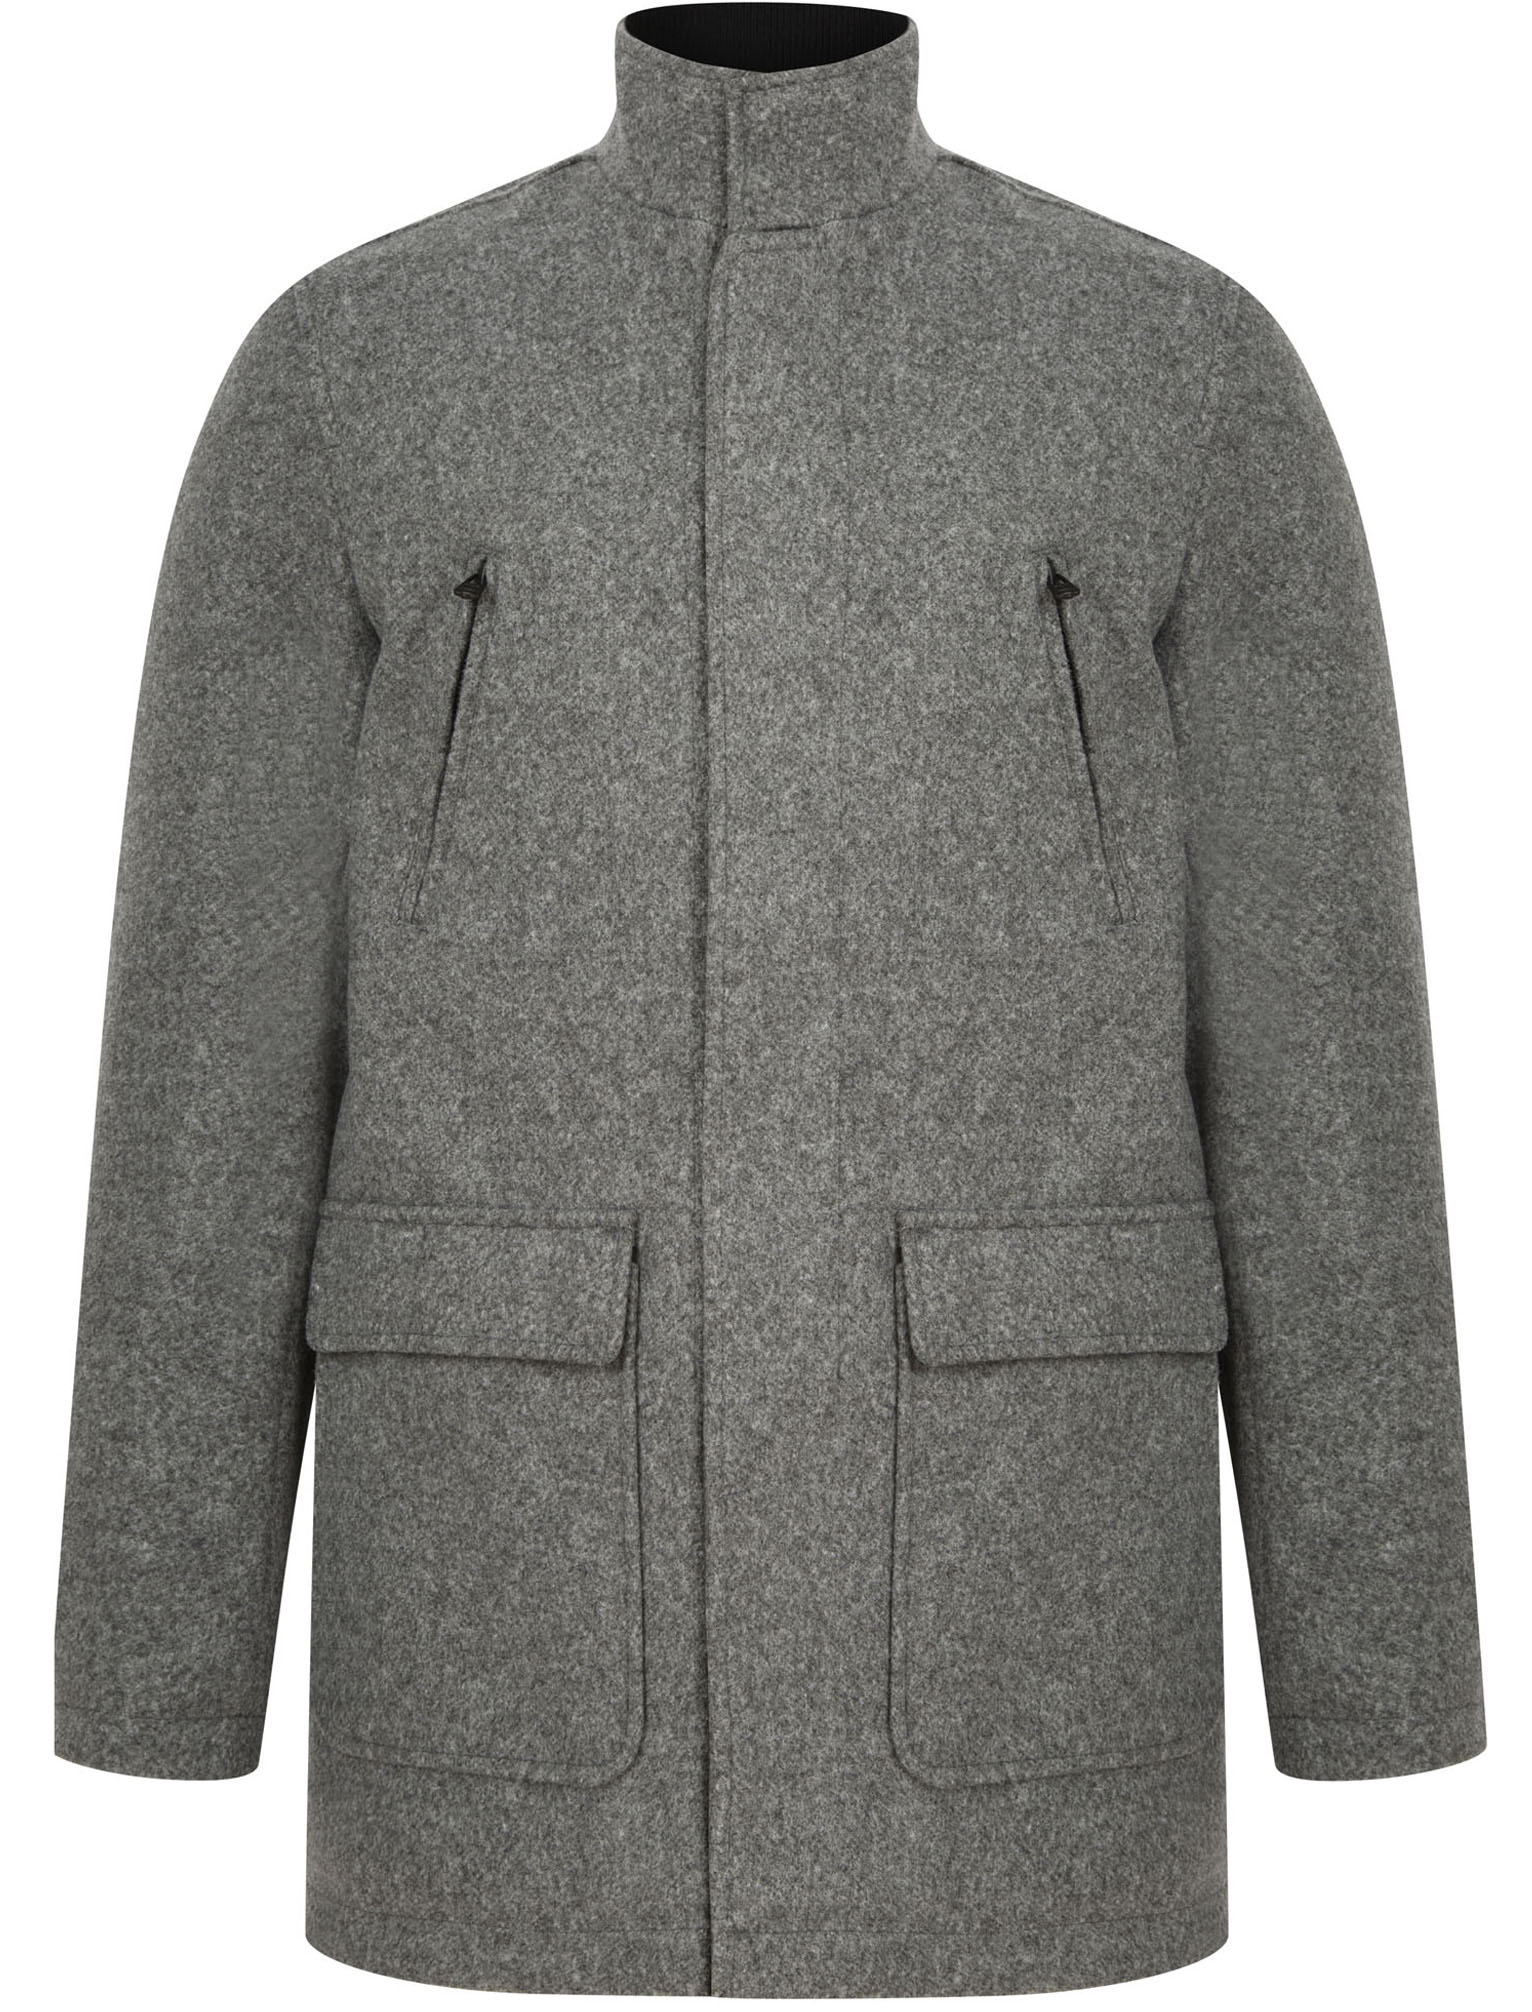 Tokyo Laundry Herren Shapiro Smart Wolle Mantel Doppellagig Hochkragen Jacke